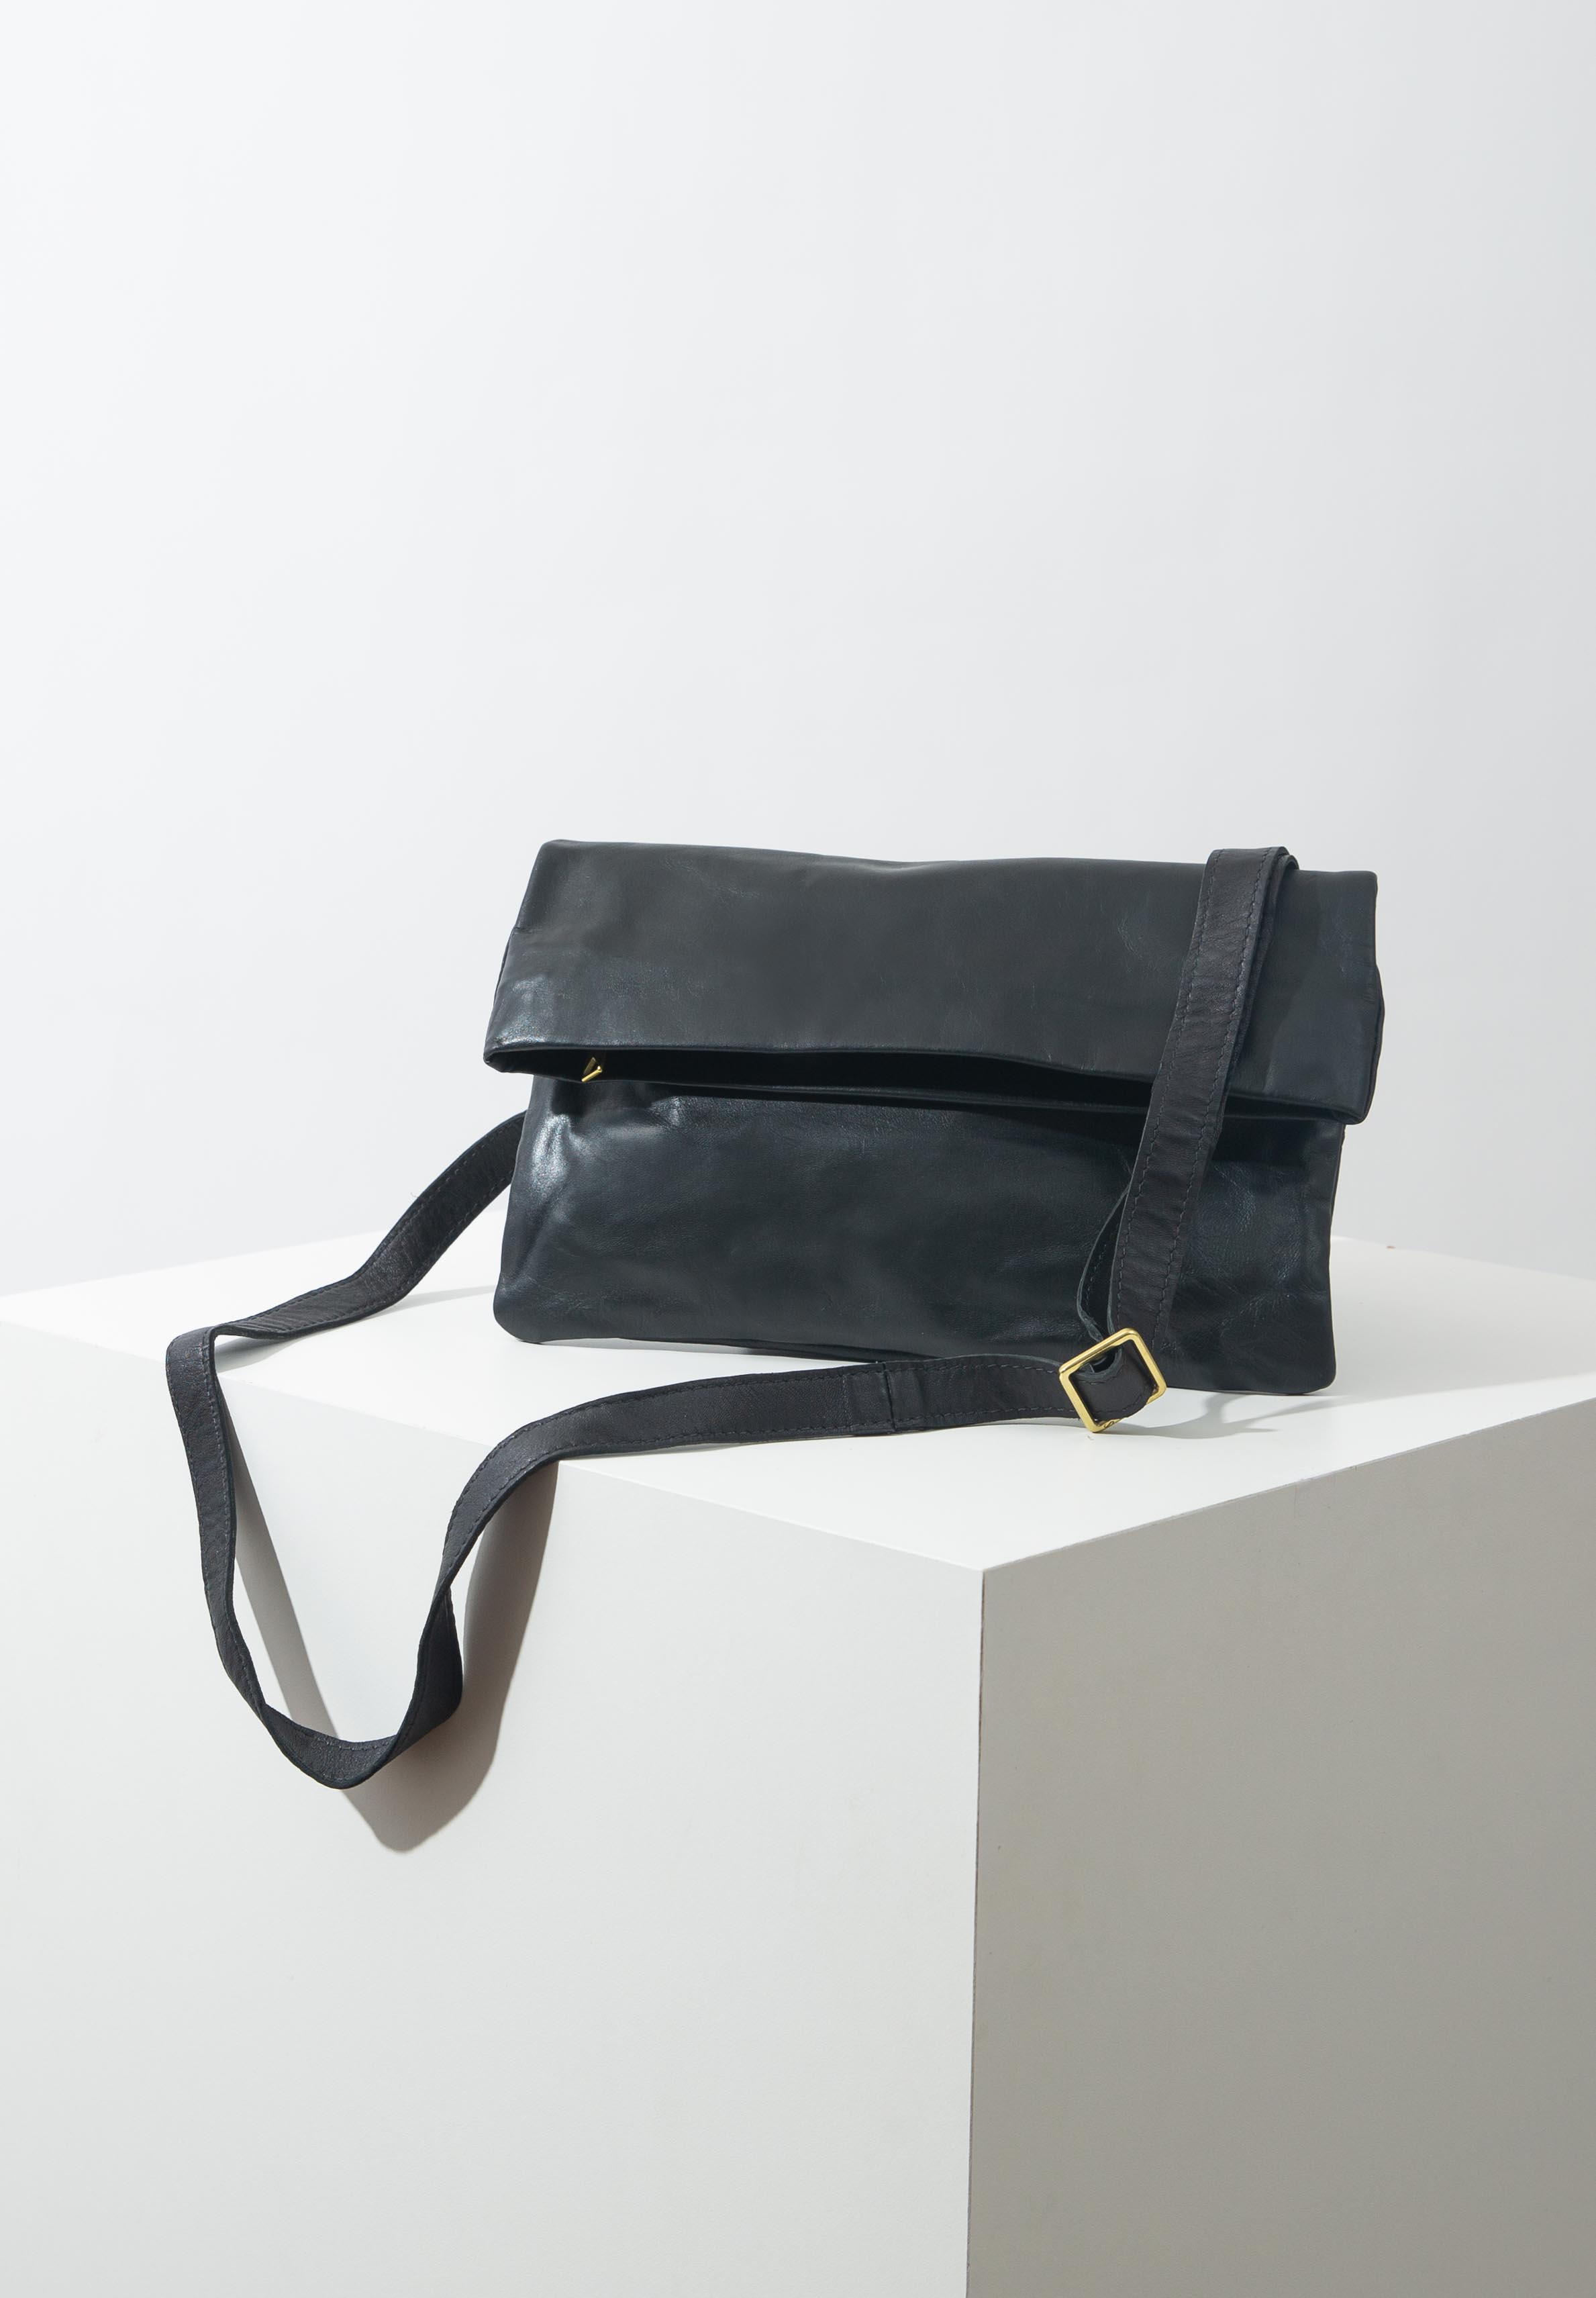 Elegant Black Cross-Body Bag - Genuine Cow Leather - Handmade in